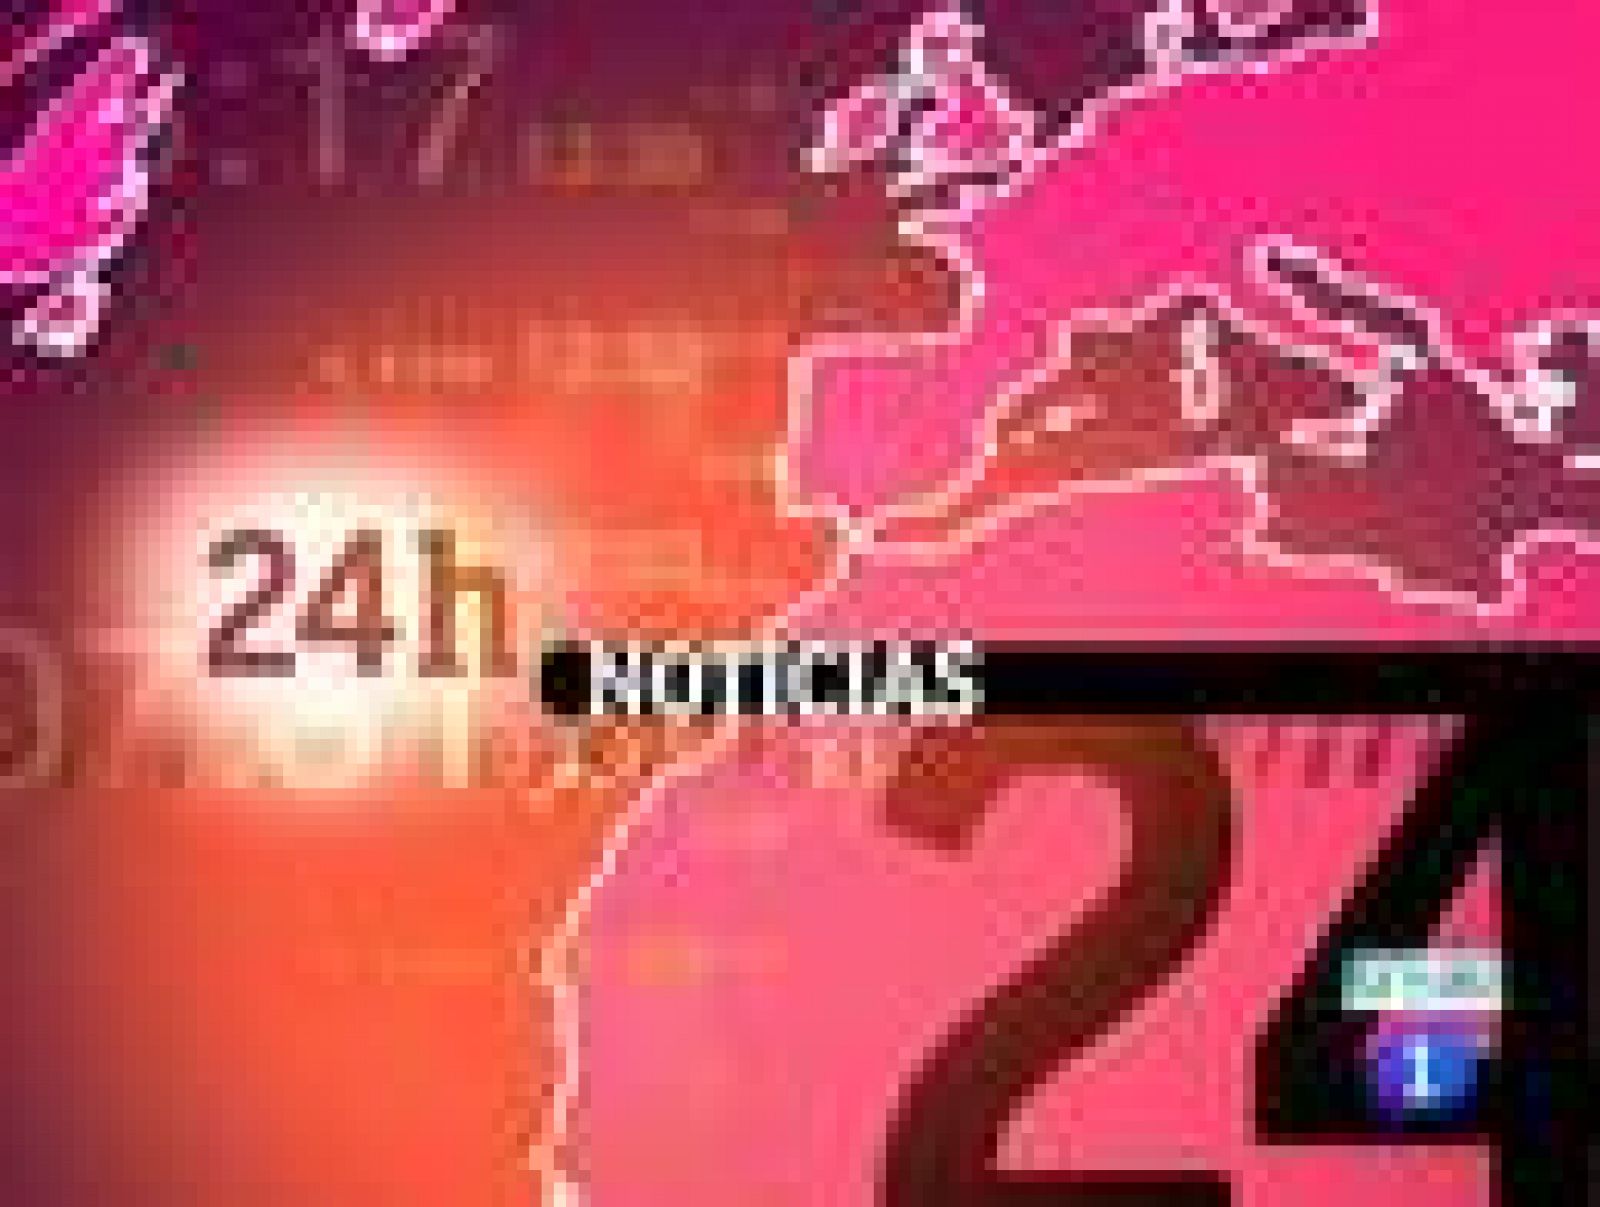 Telediario 1: Telediario matinal en 4' (19/11/11) | RTVE Play